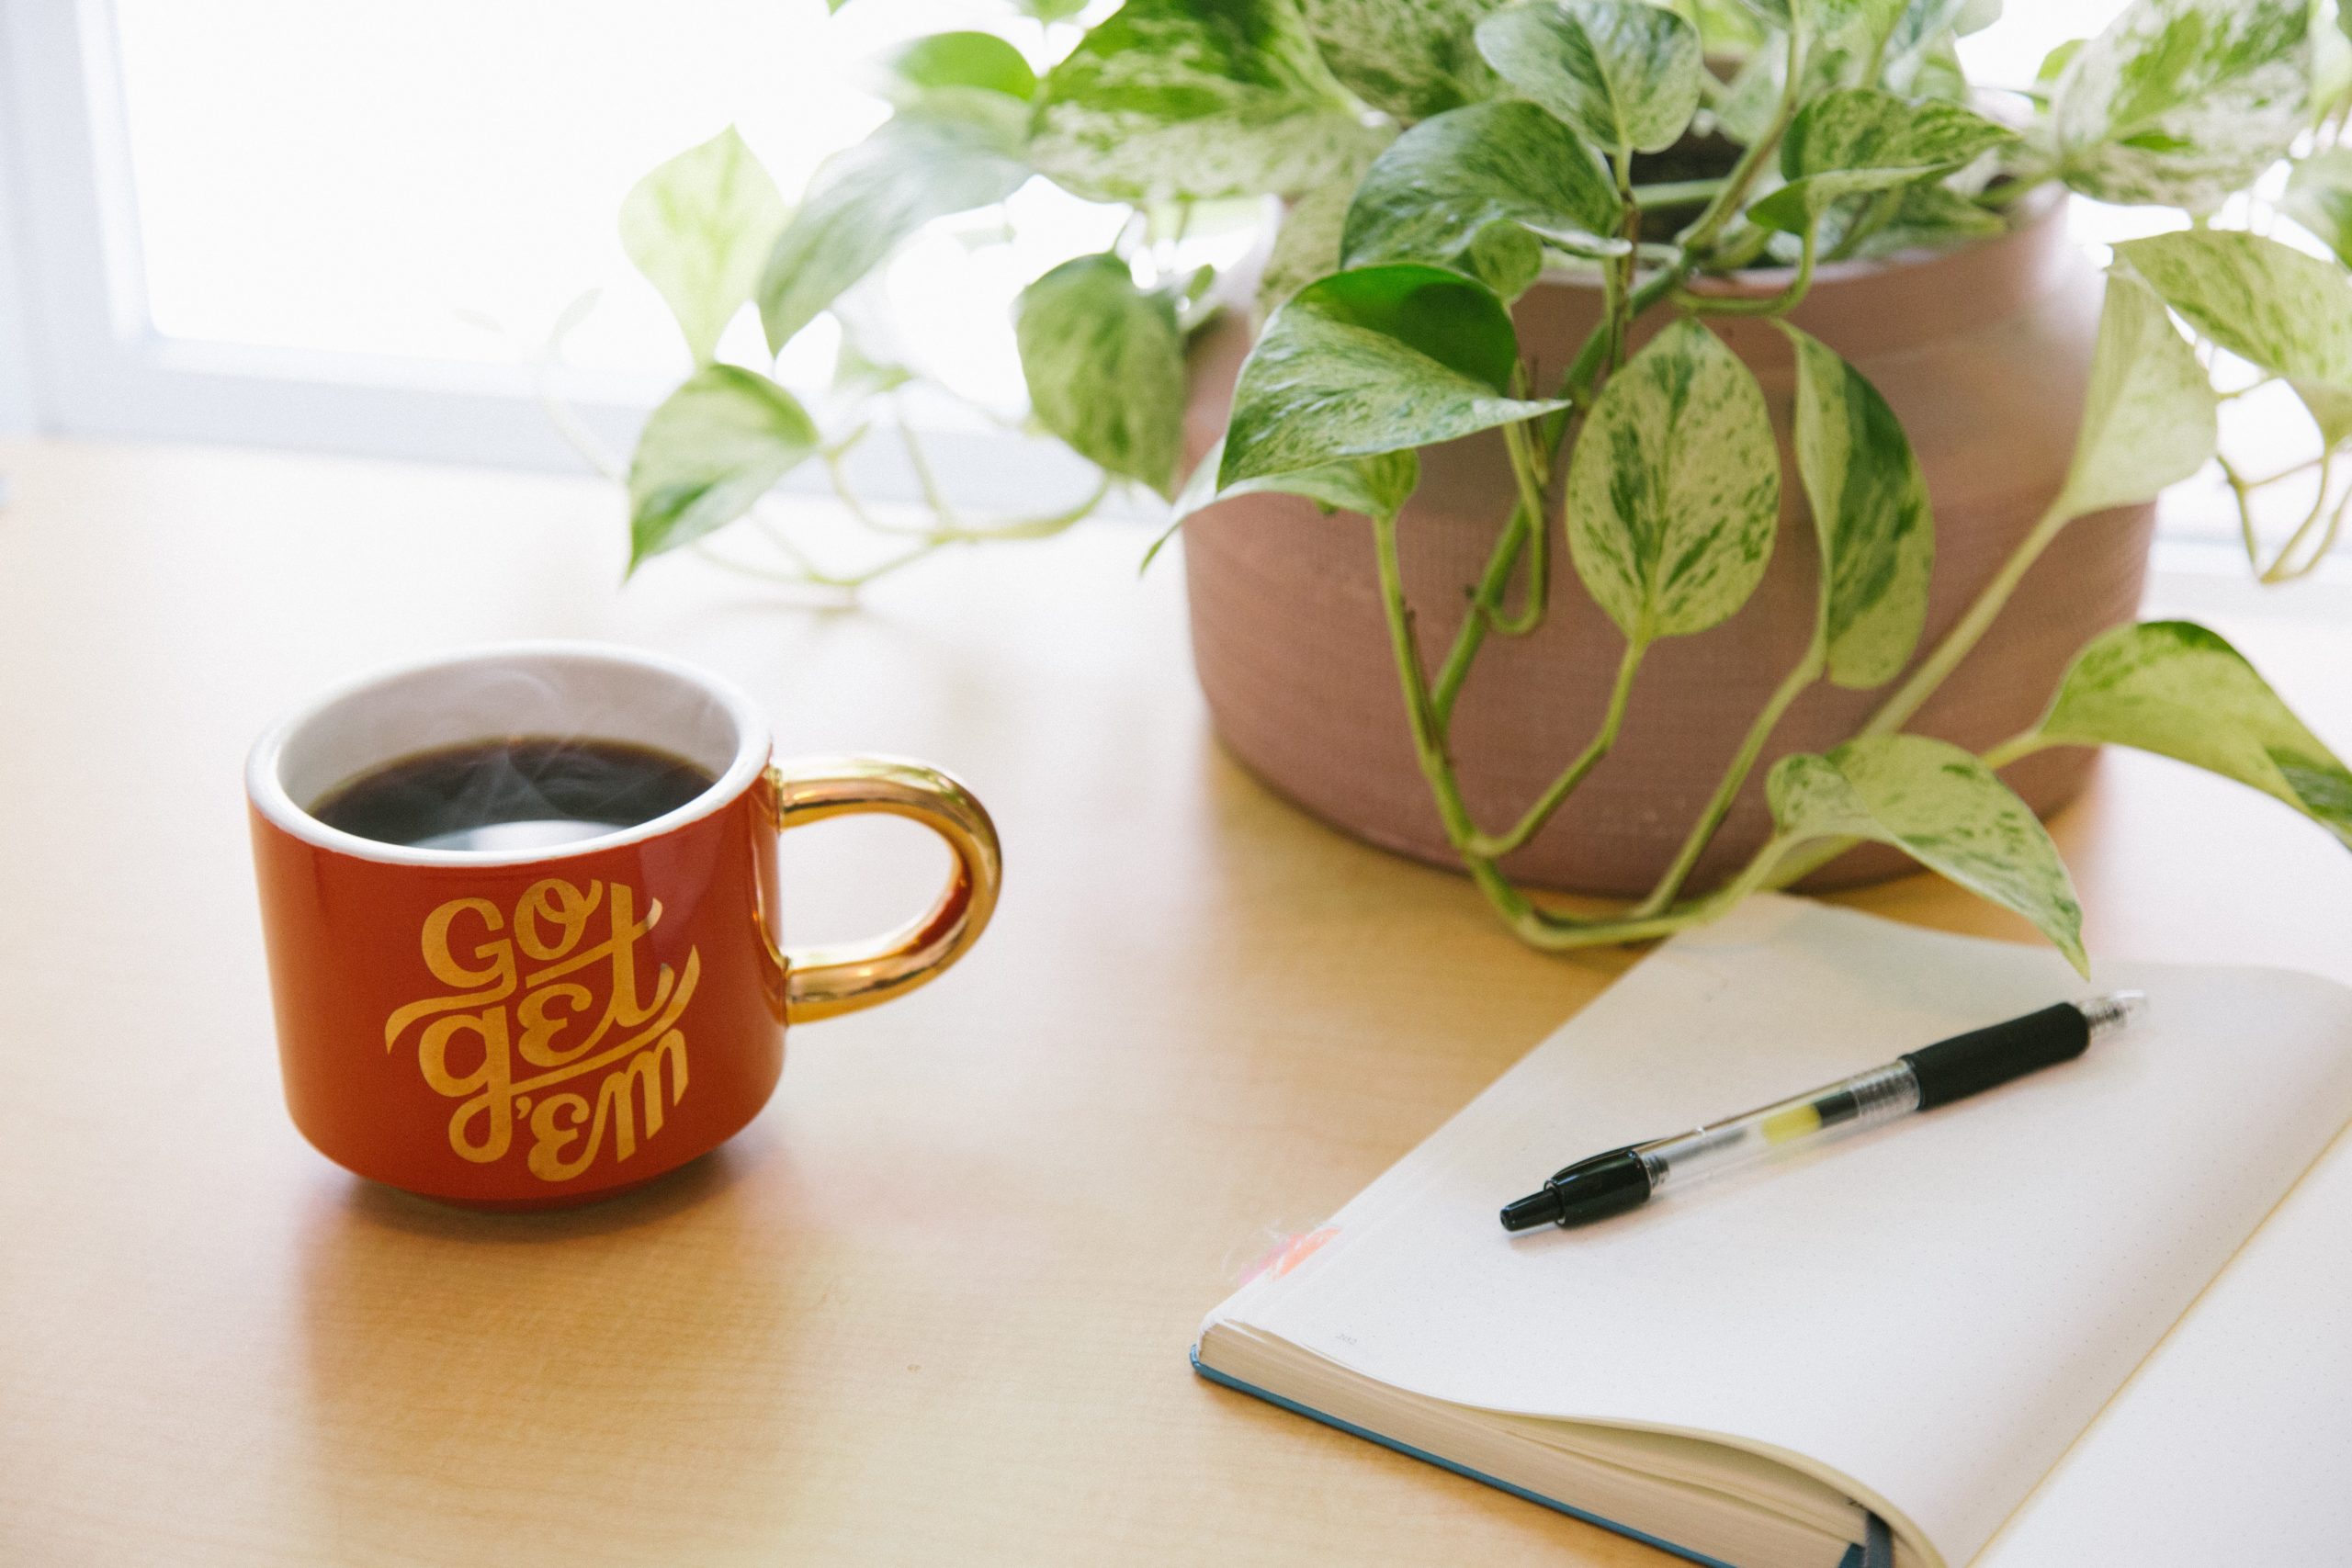 Journal, plant, and coffee mug full of coffee